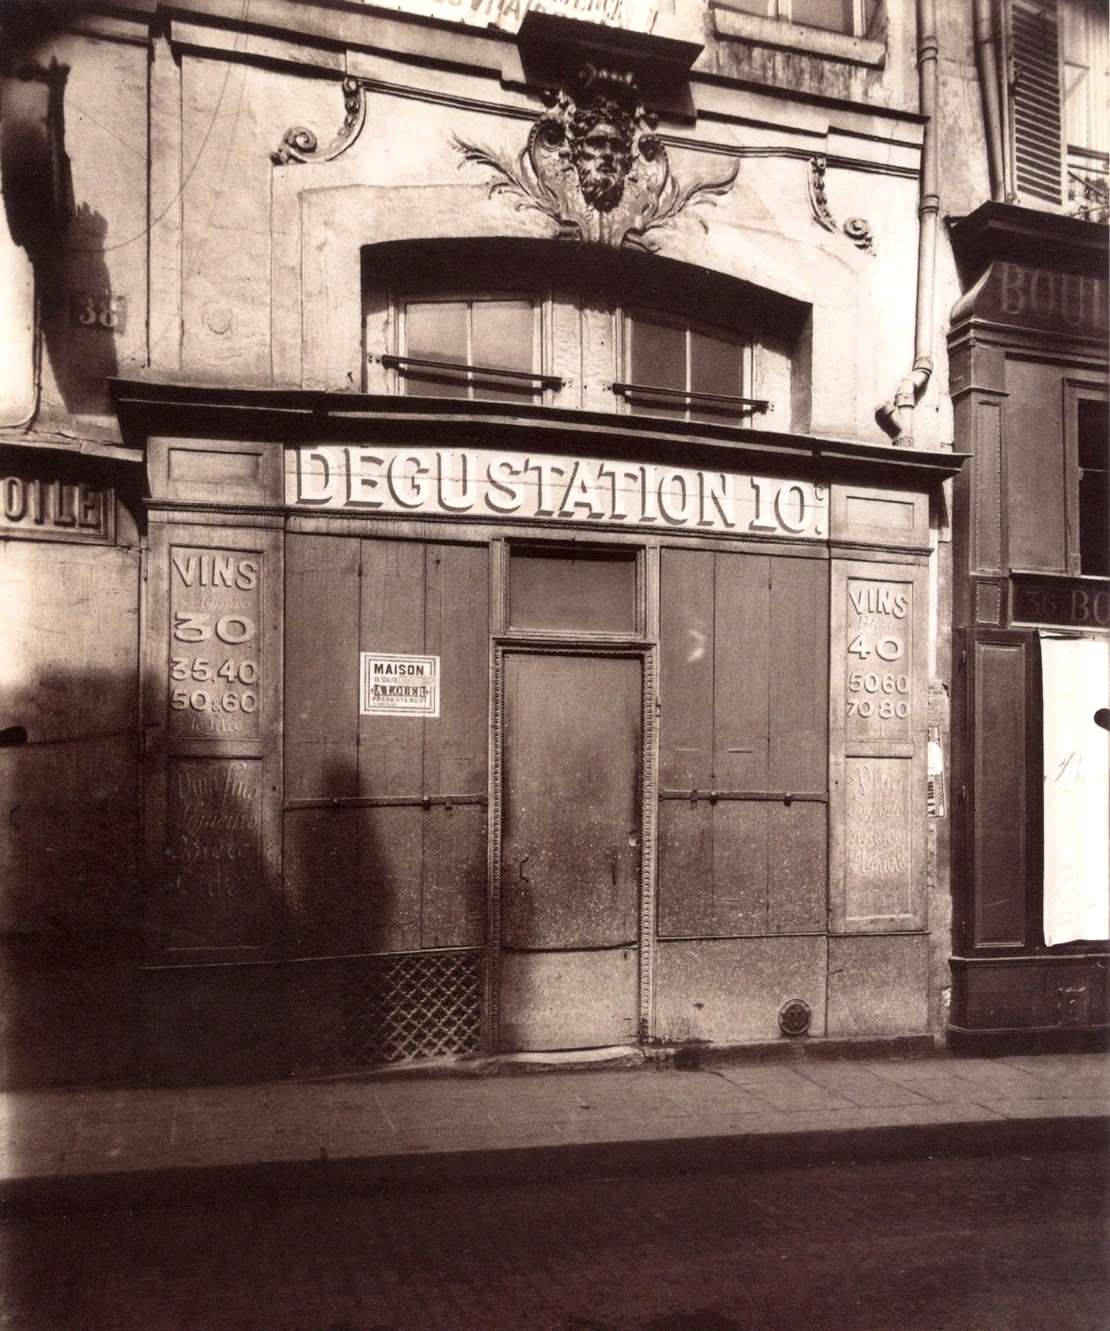 Old door, 38 rue des Saint-P res in Paris, 1911